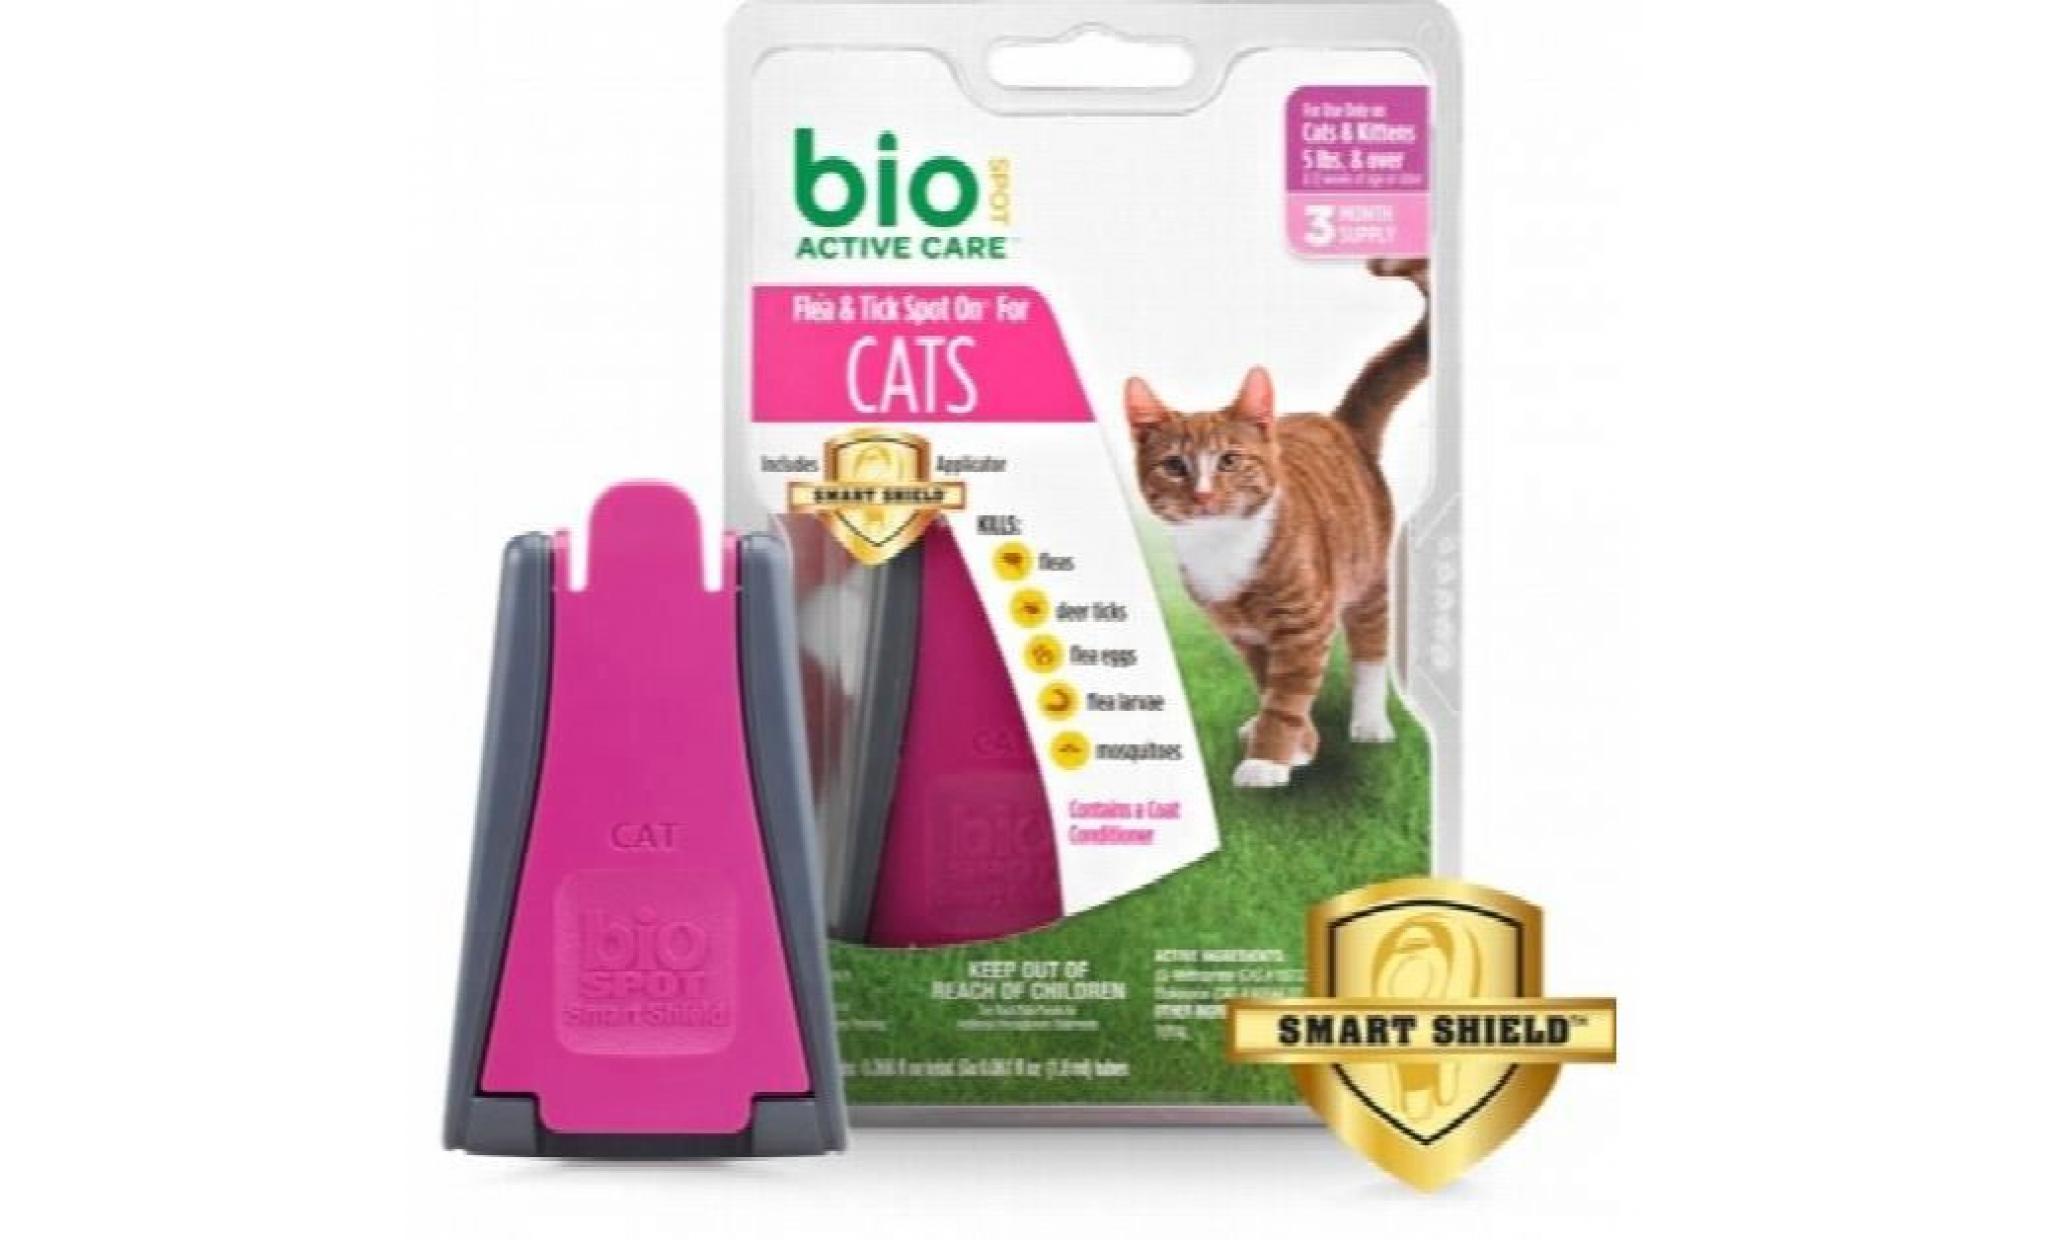 bio spot active care cat flea and tick spot on with applicator, over 5 lb, 3 ct 1e2lfm